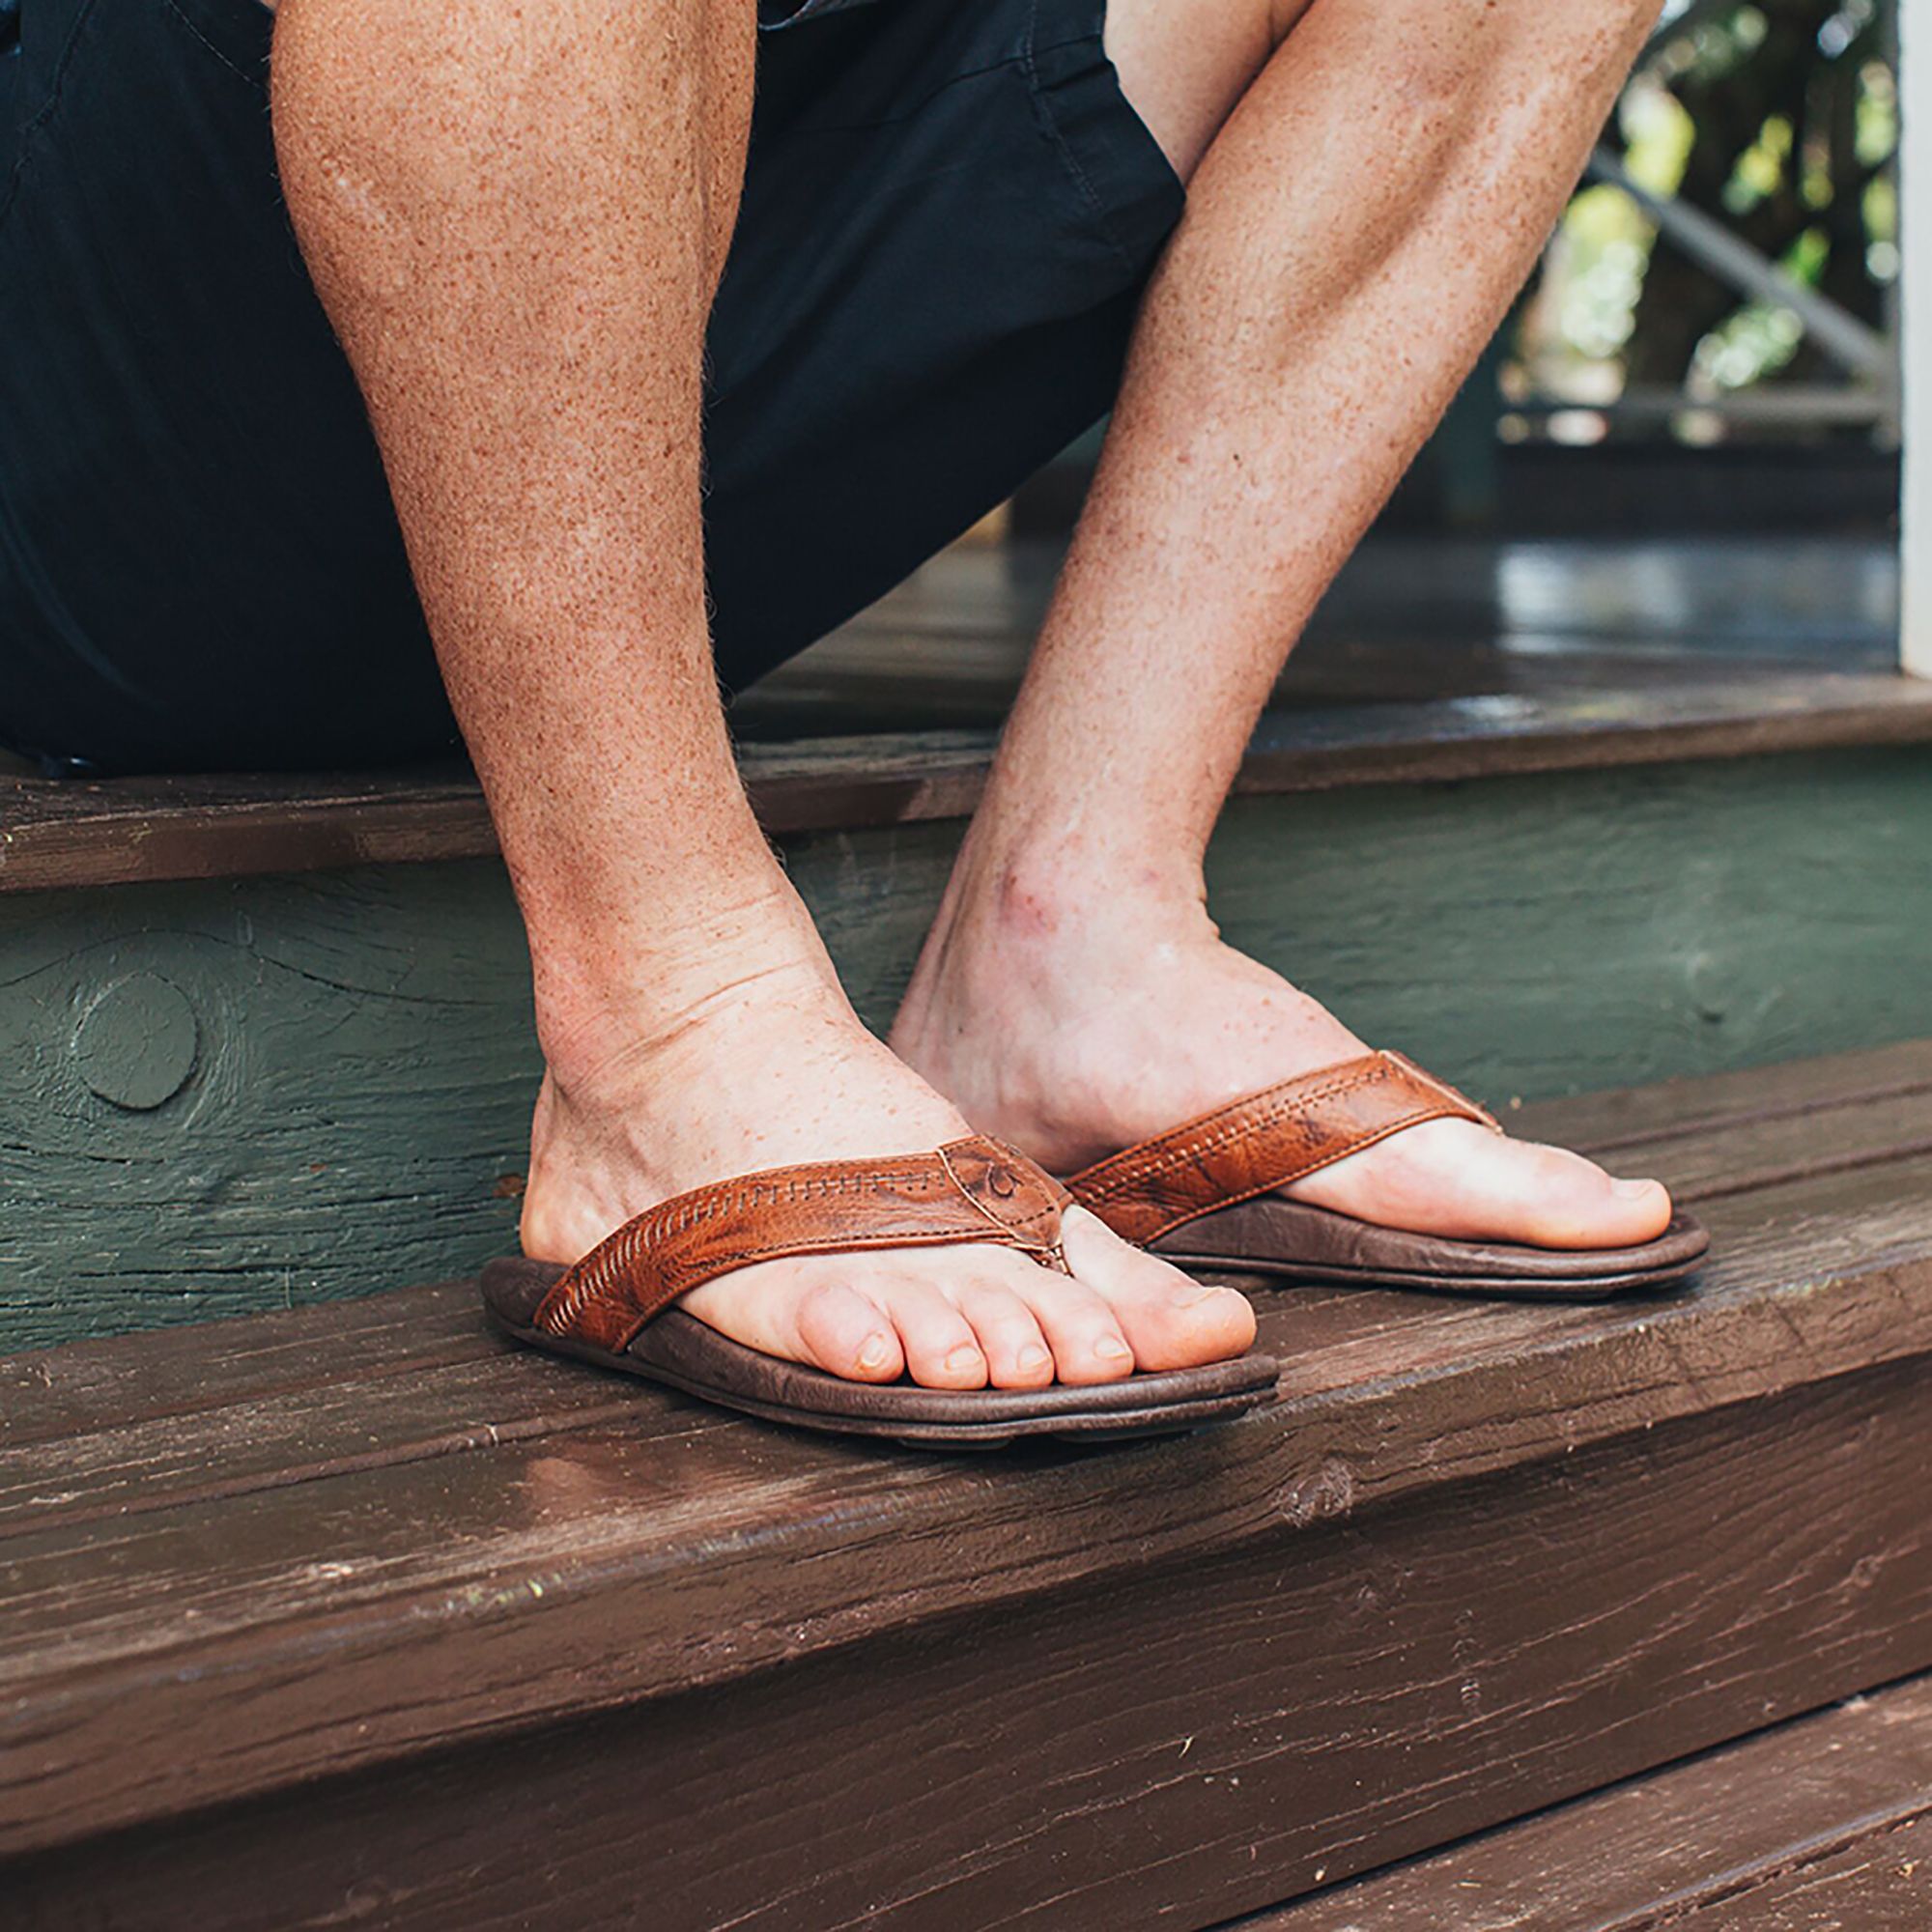 OluKai Men's Hiapo Sandals